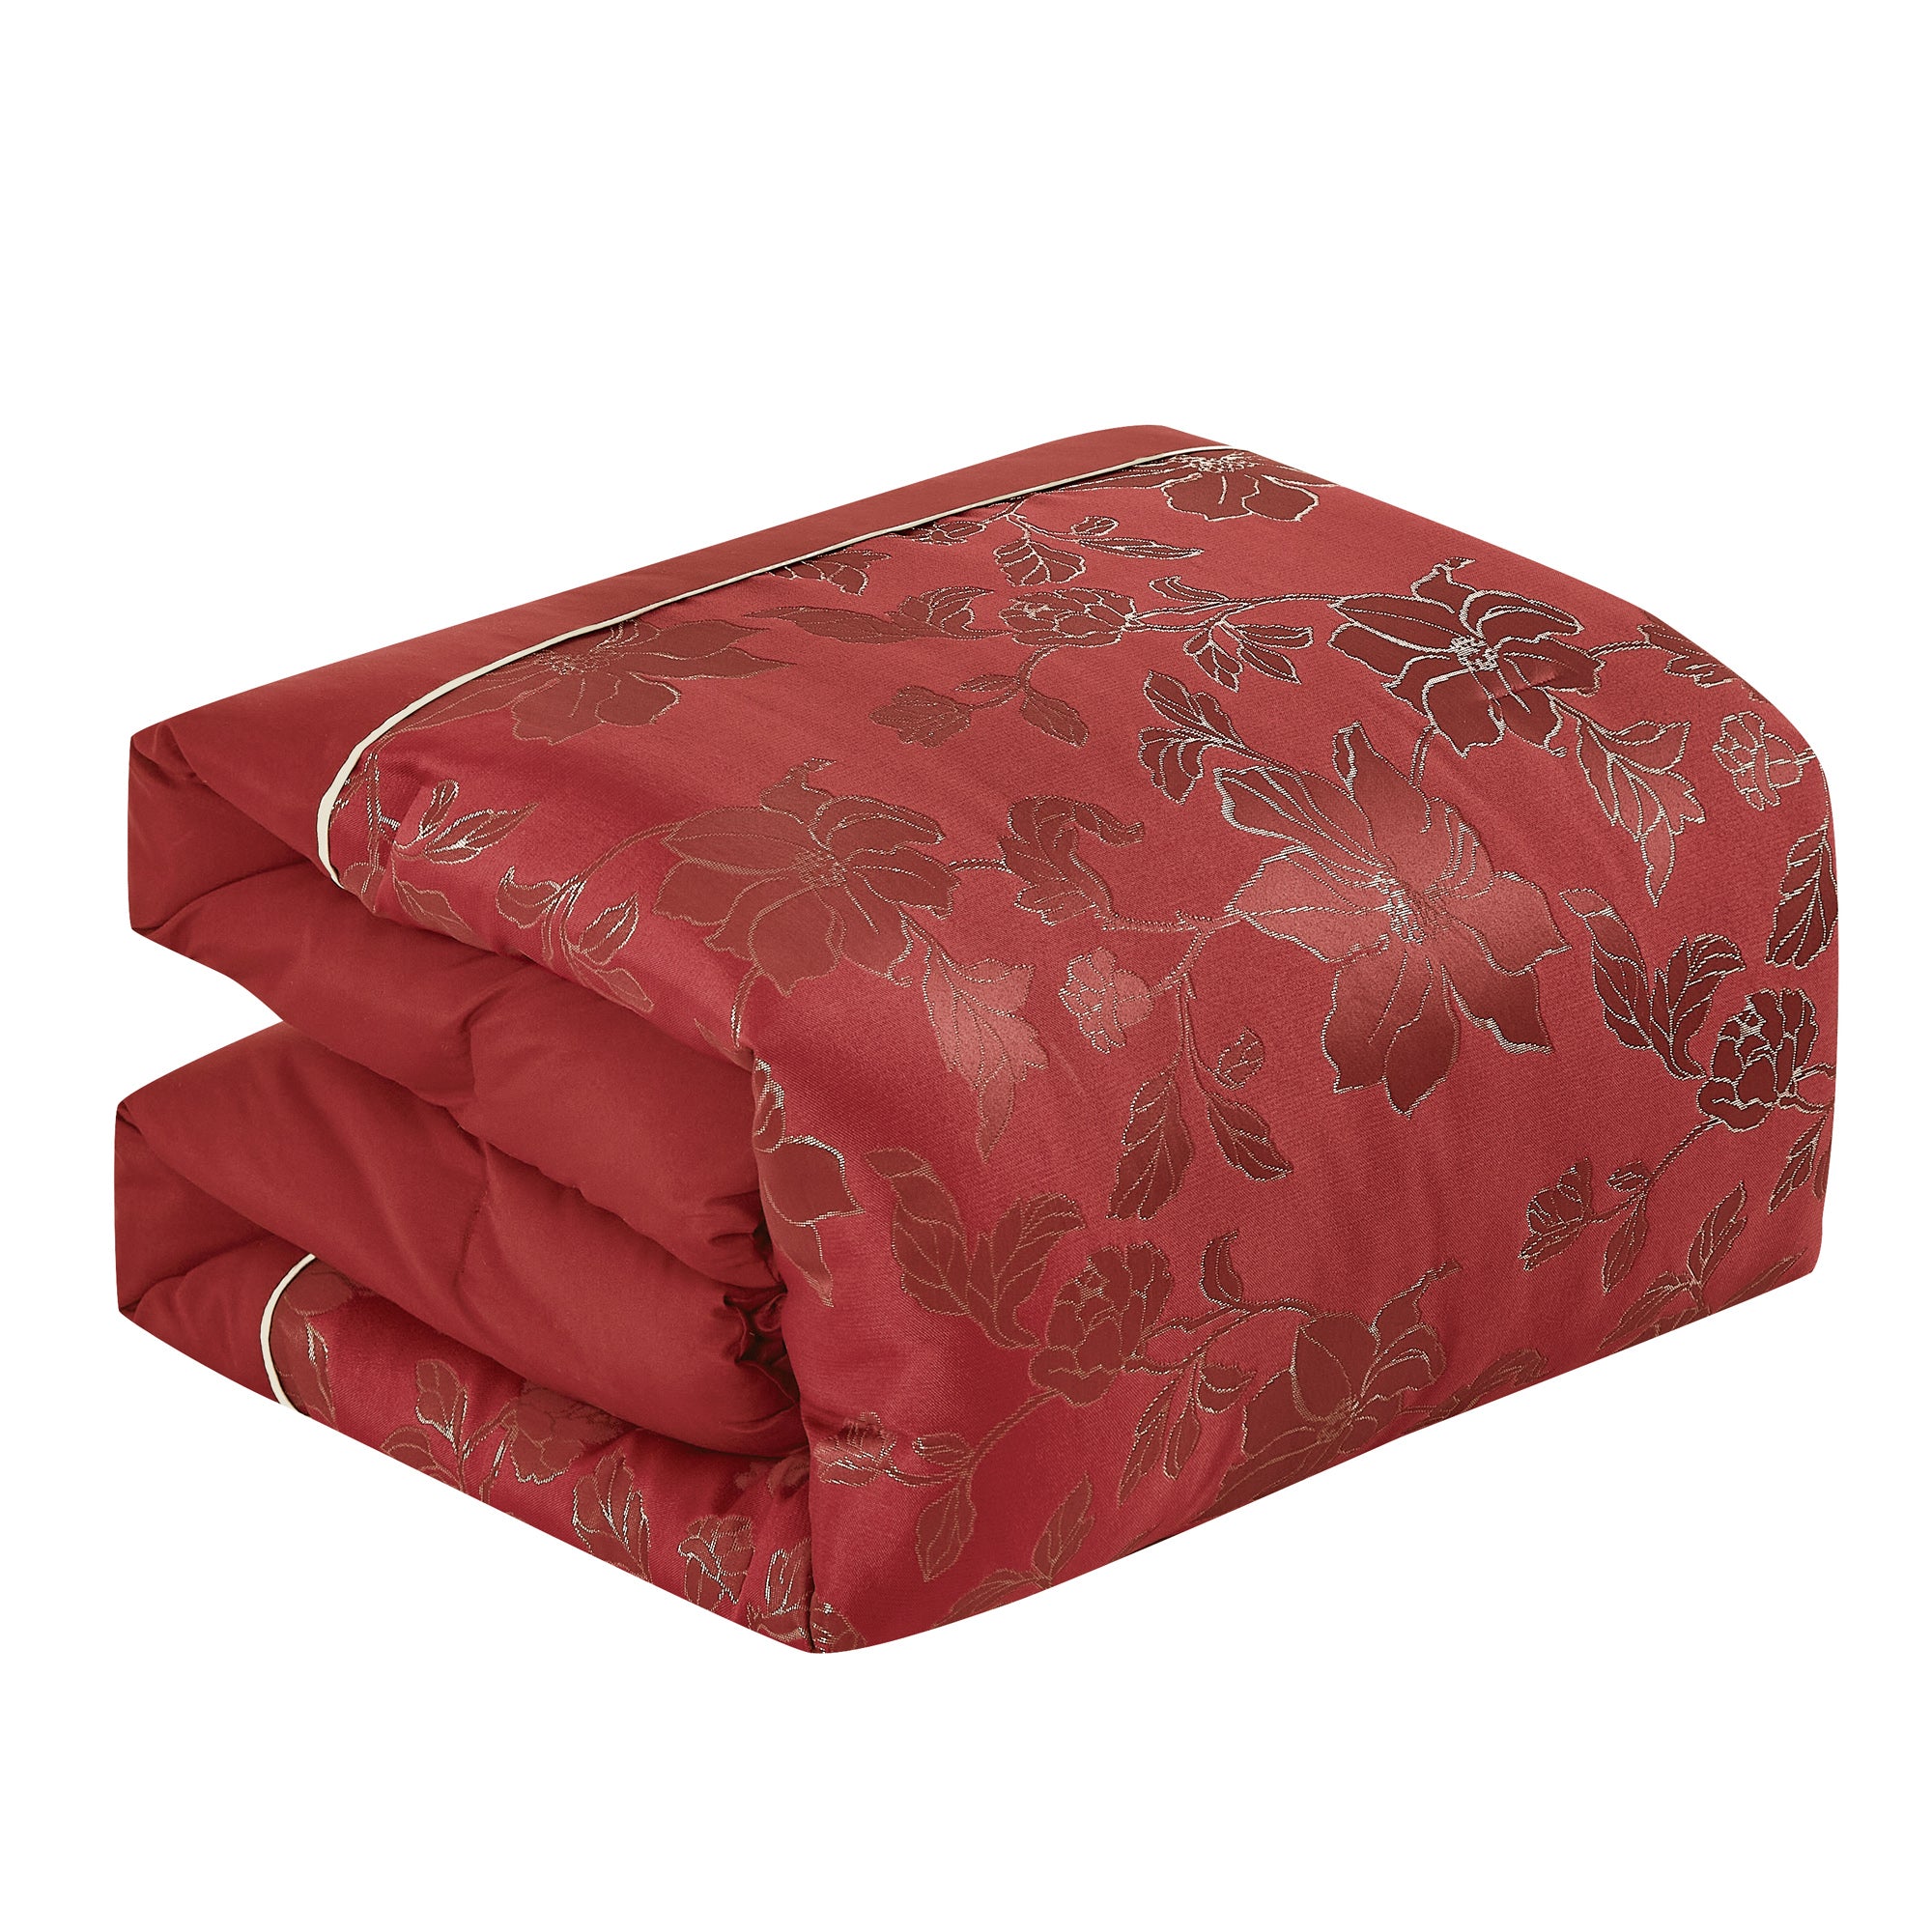 7 PCS Bedding Comforter Set Dalia 2024